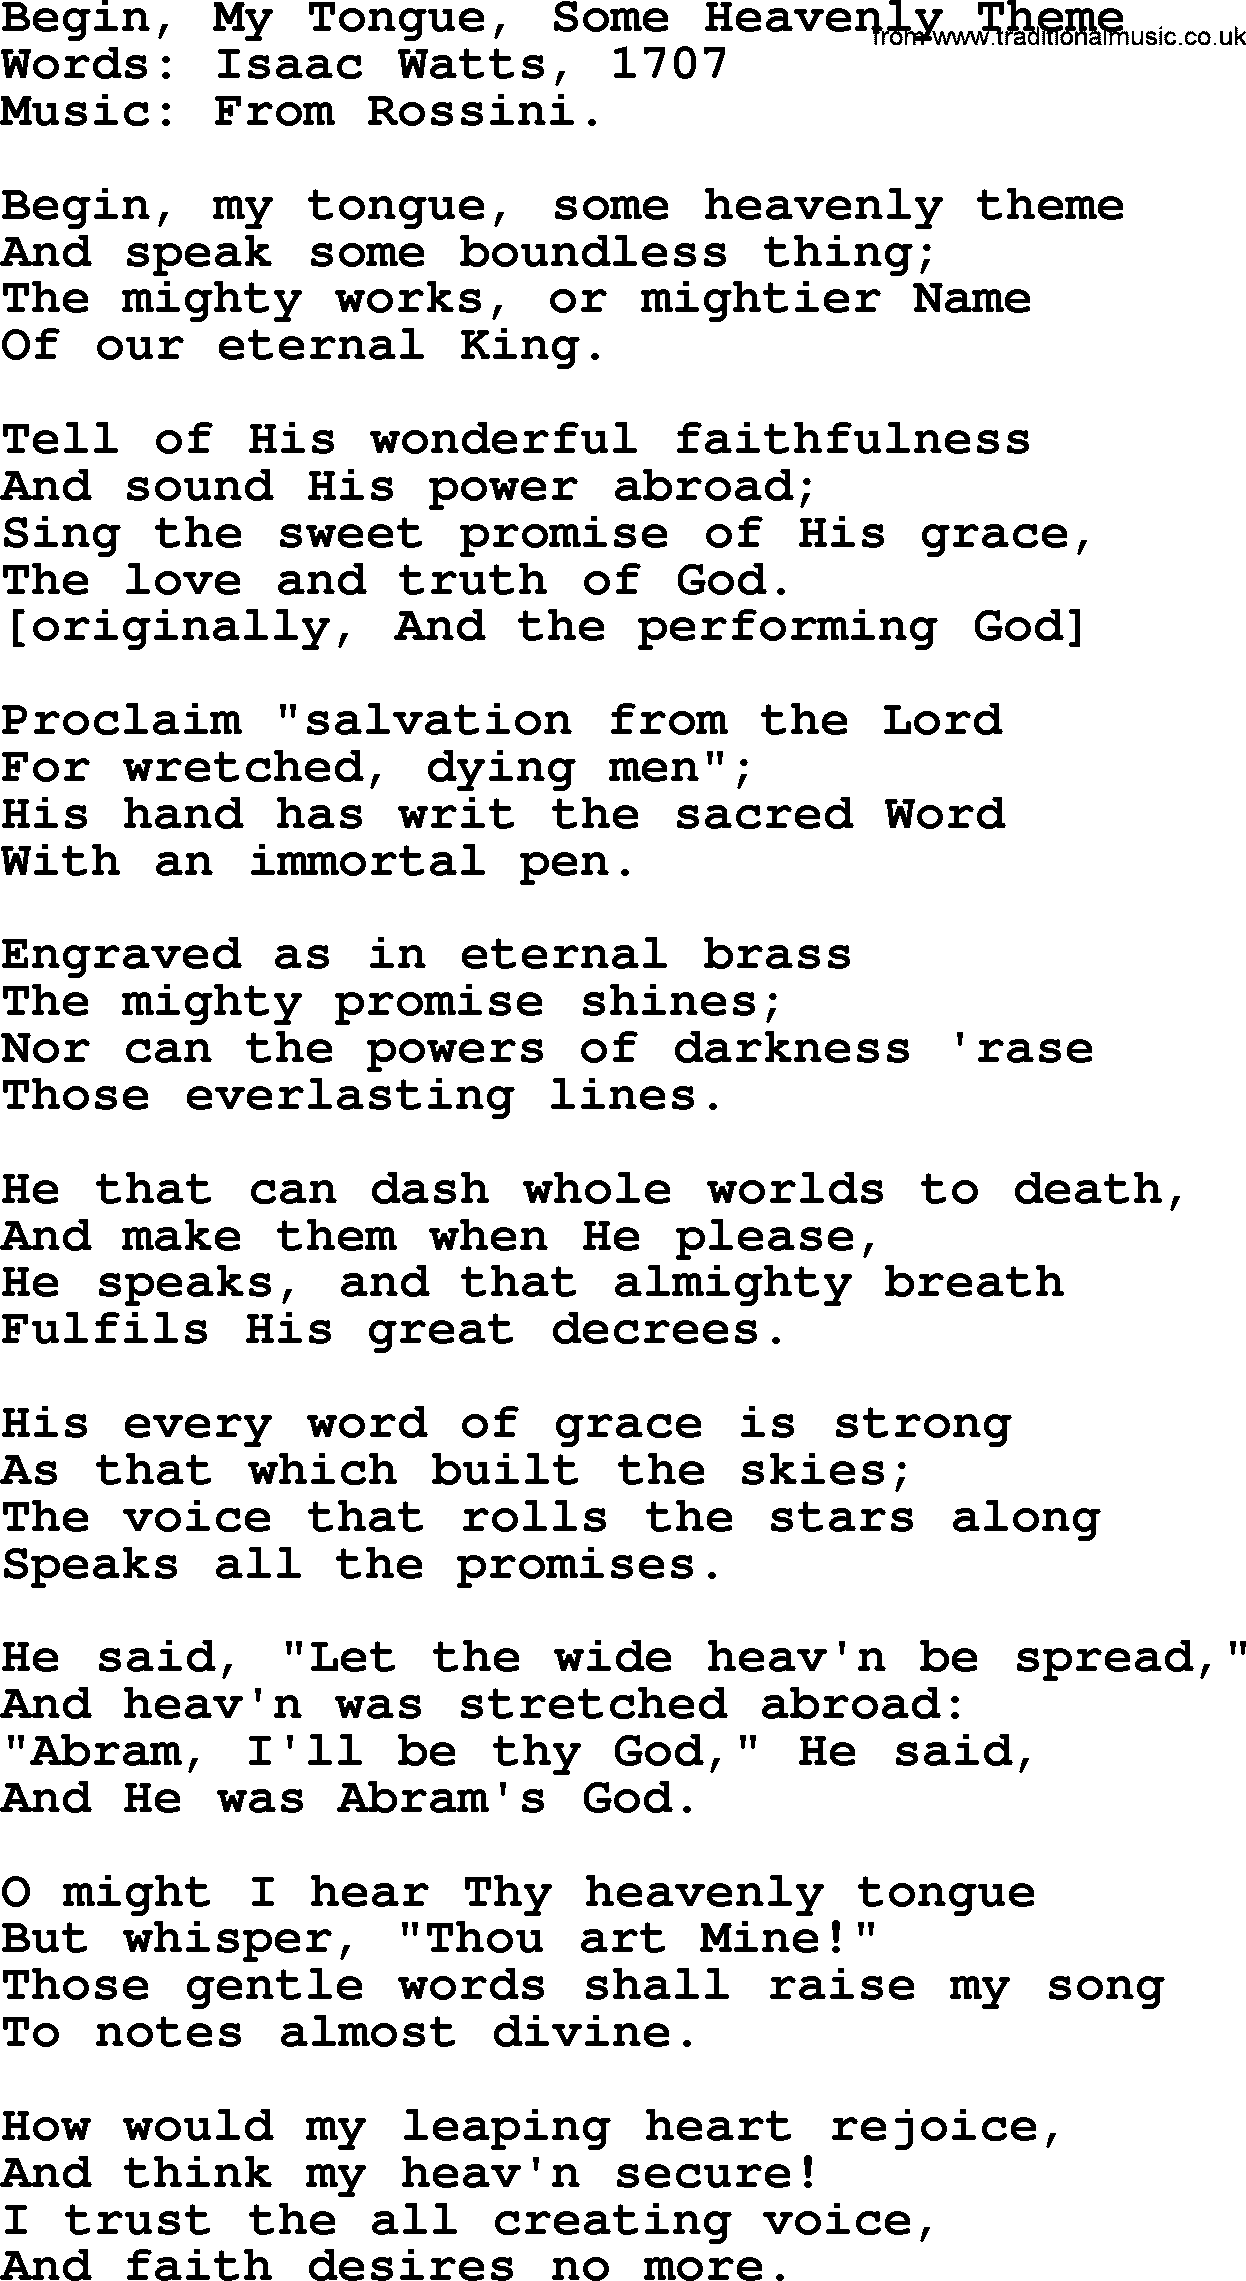 Isaac Watts Christian hymn: Begin, My Tongue, Some Heavenly Theme- lyricss